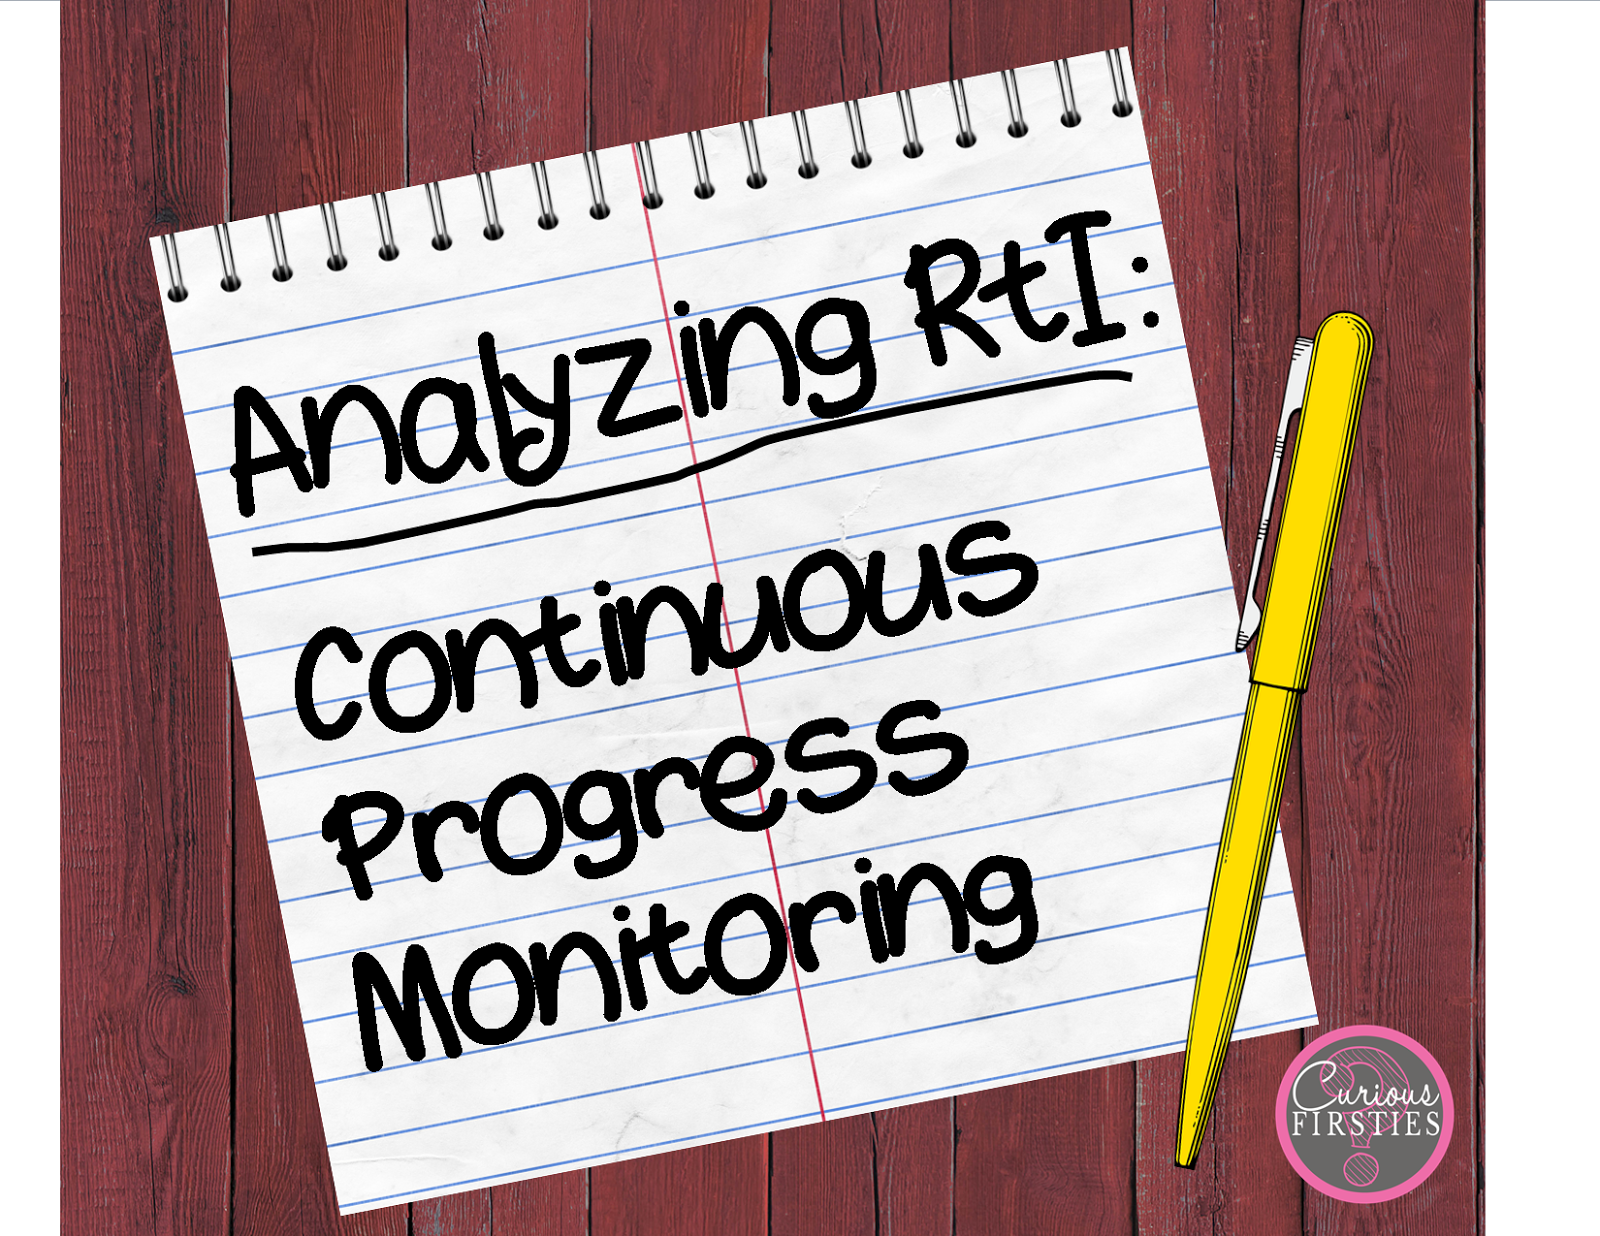 Reviewing progress. Monitoring progress.